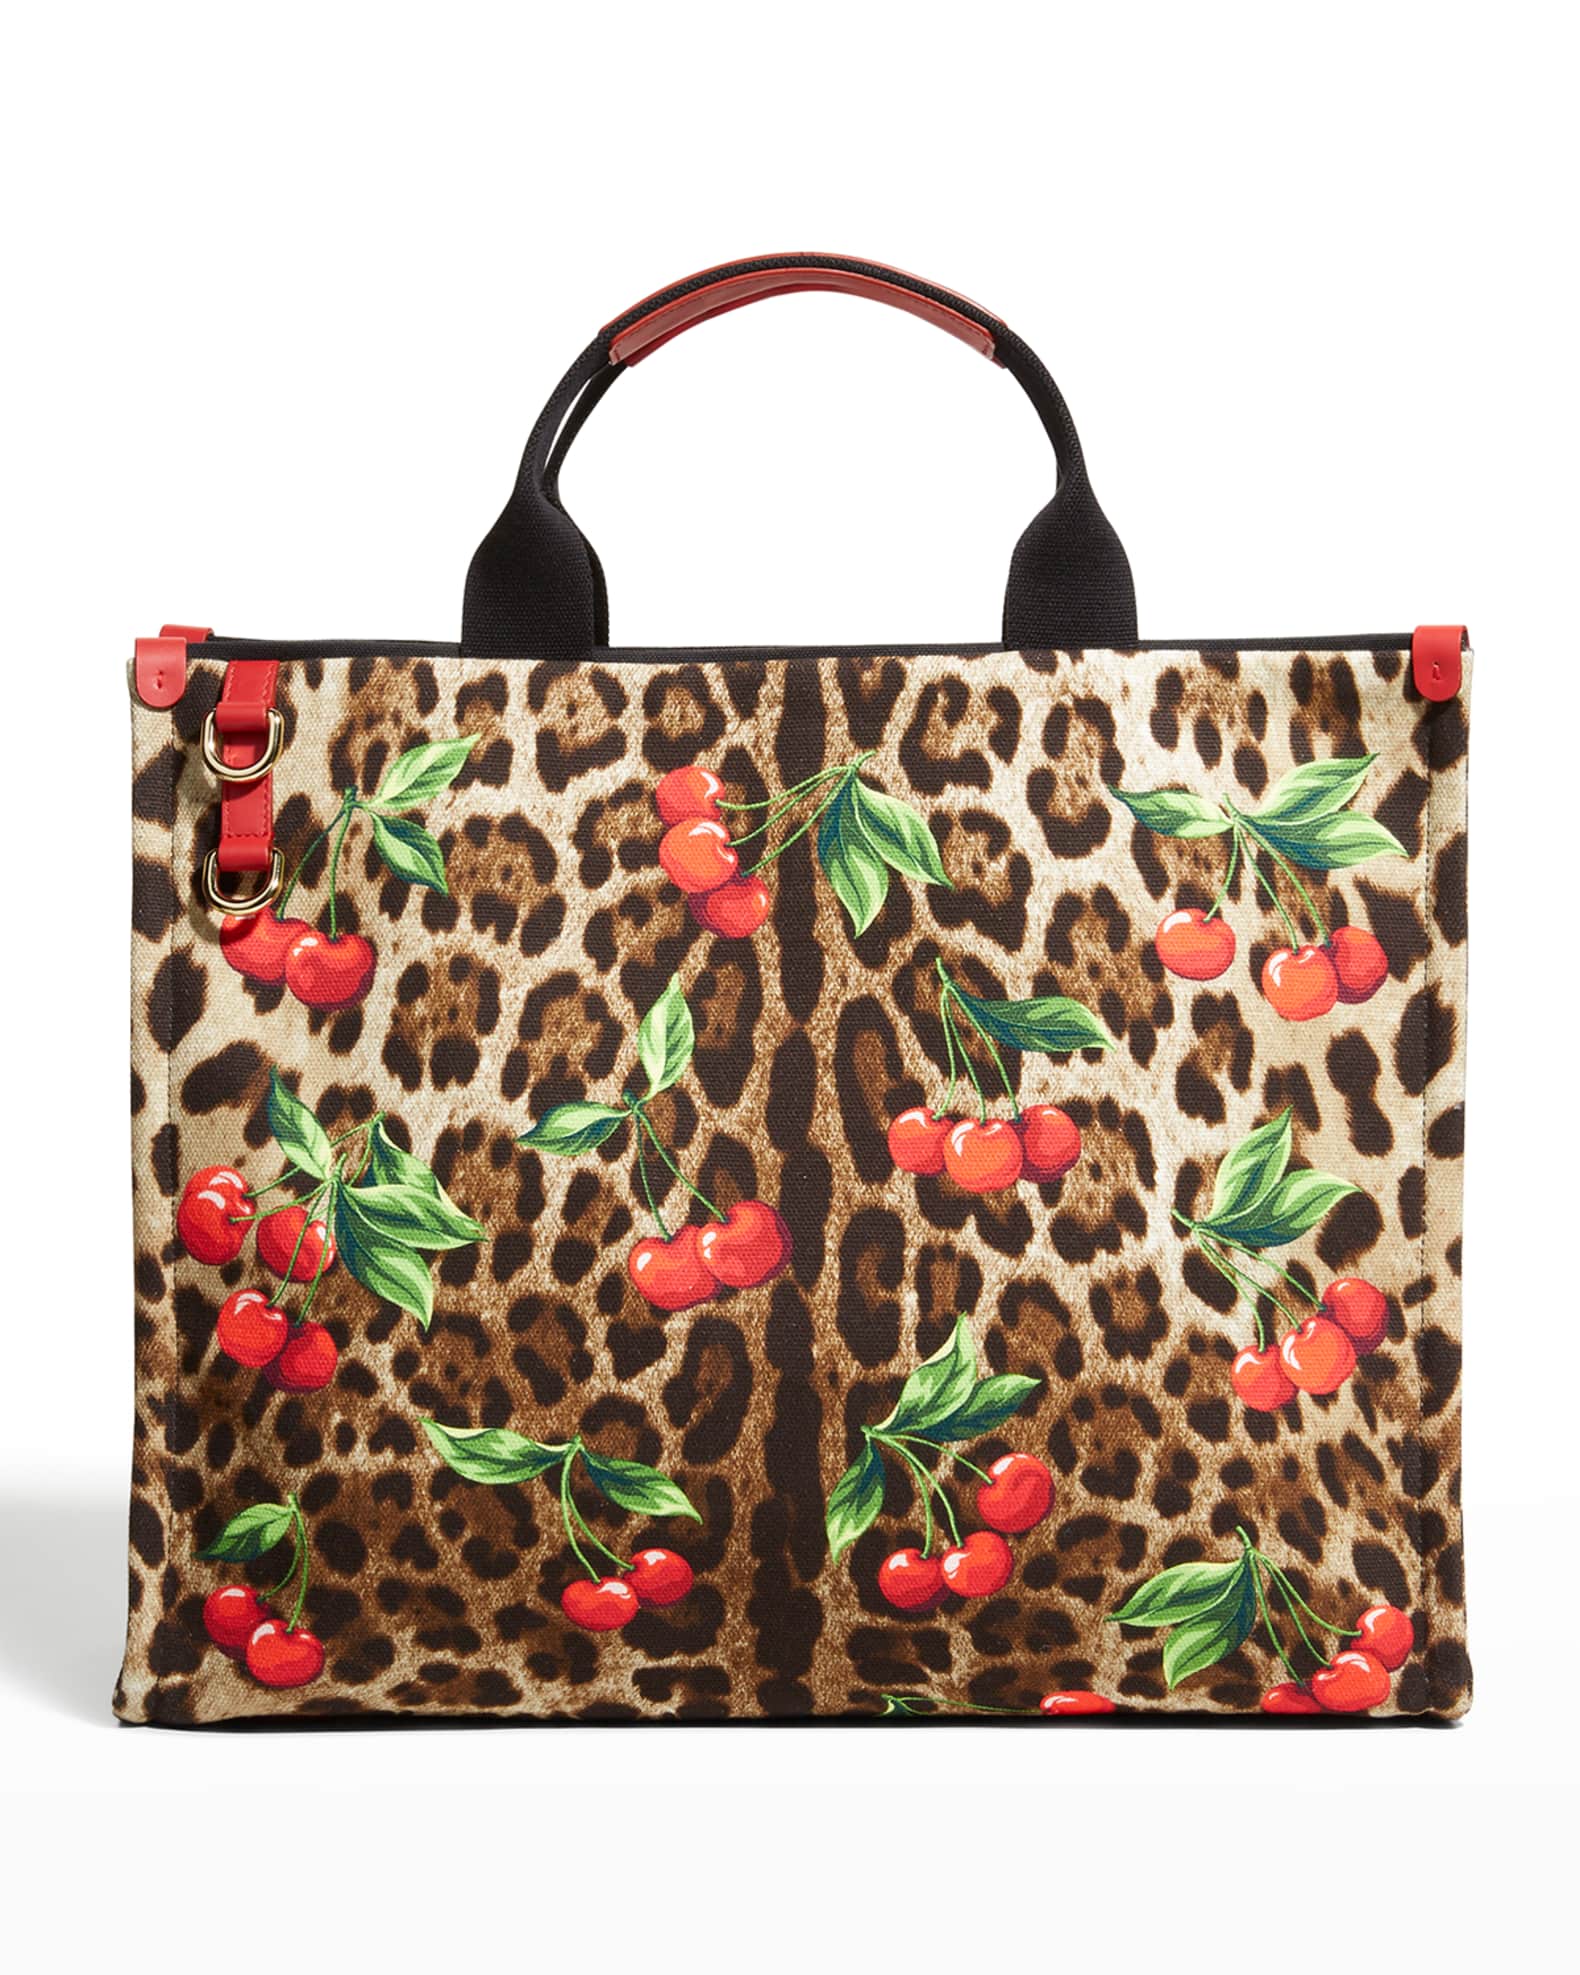 Dolce&Gabbana Cherry Leopard Shopper Tote Bag | Neiman Marcus